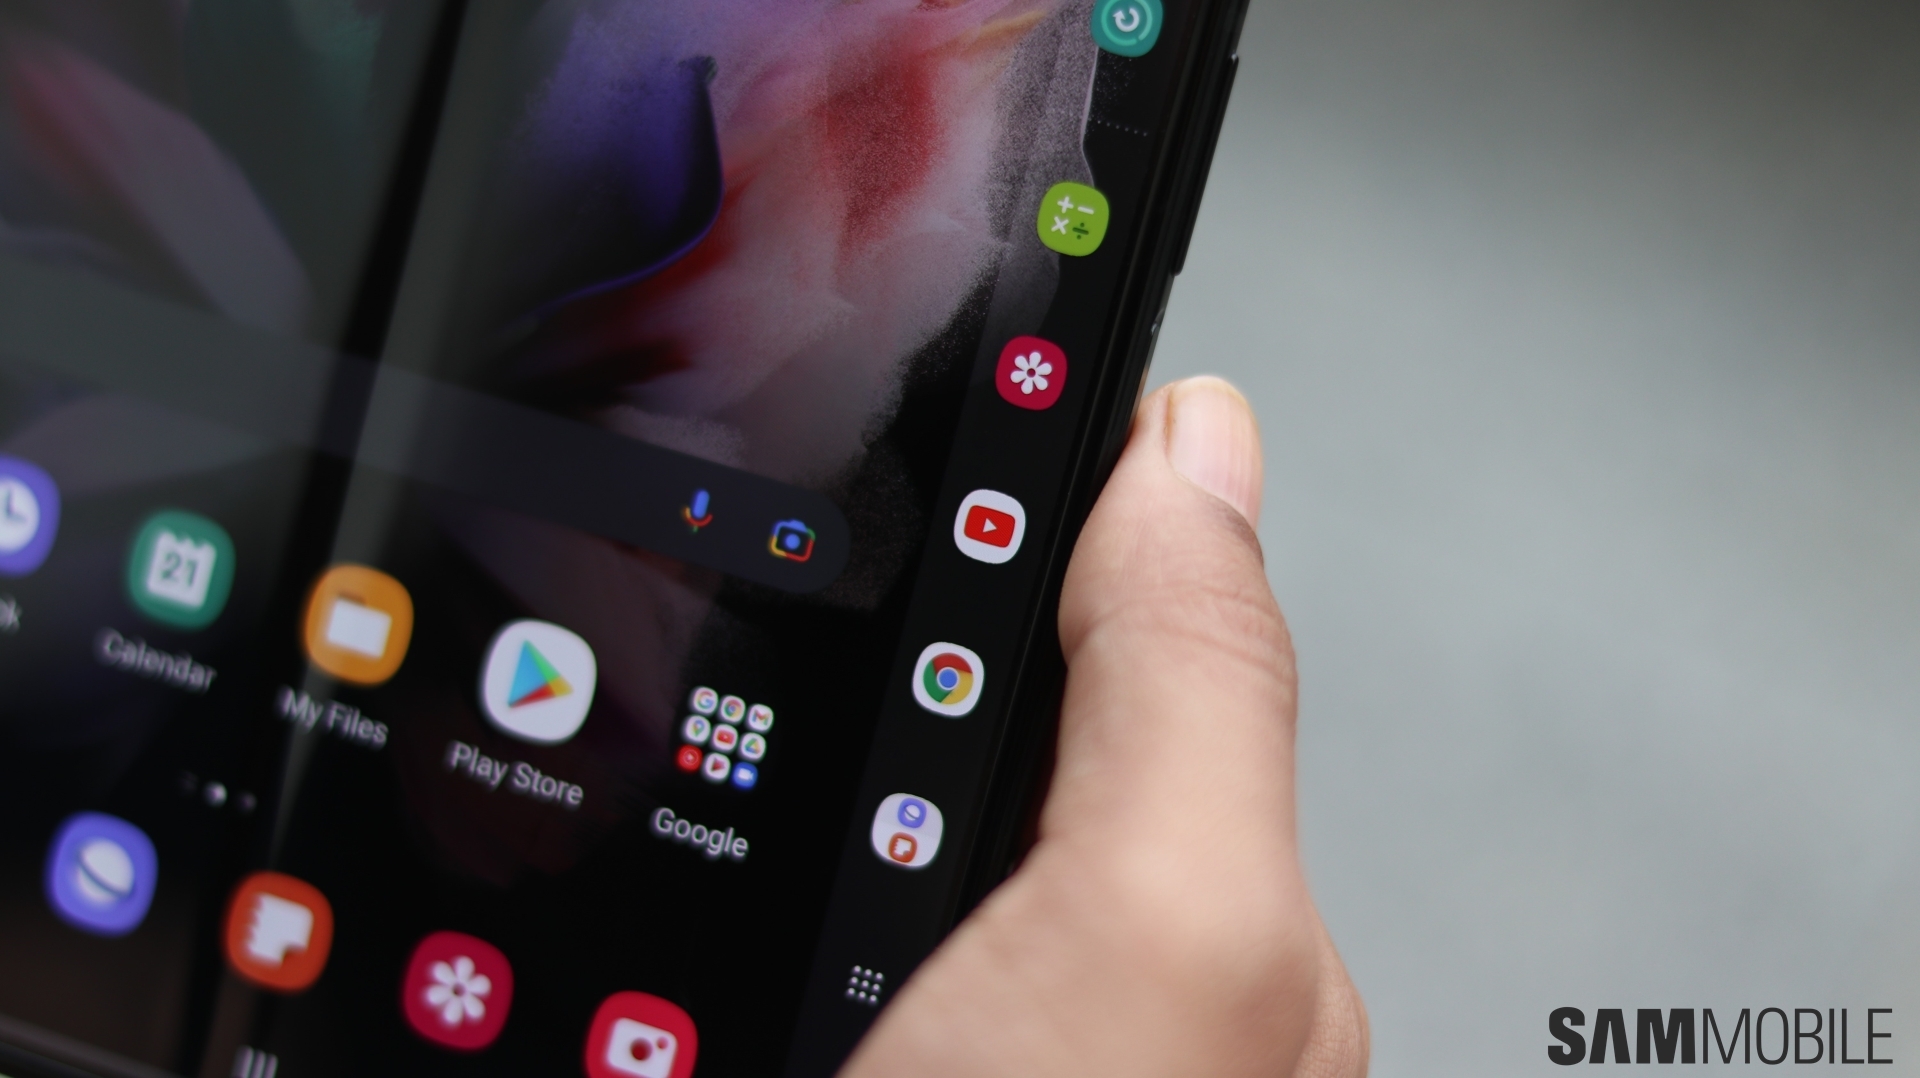 Galaxy Tab S6 Lite (2022 model) gets One UI 6 update in India - SamMobile